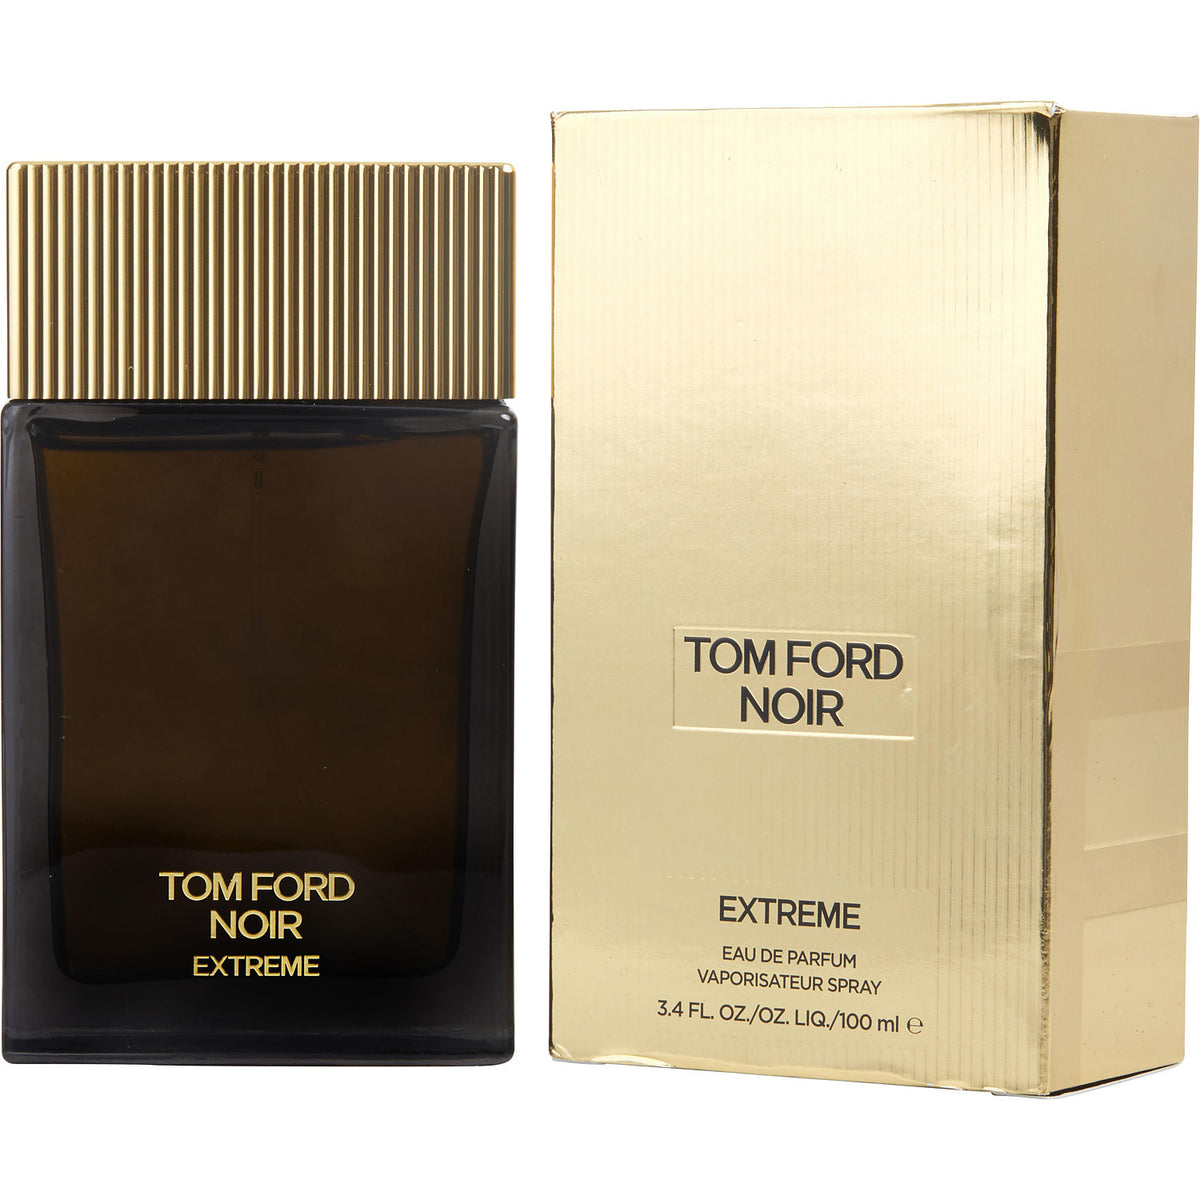 Noir Extreme by Tom Ford Fragrance Samples, DecantX